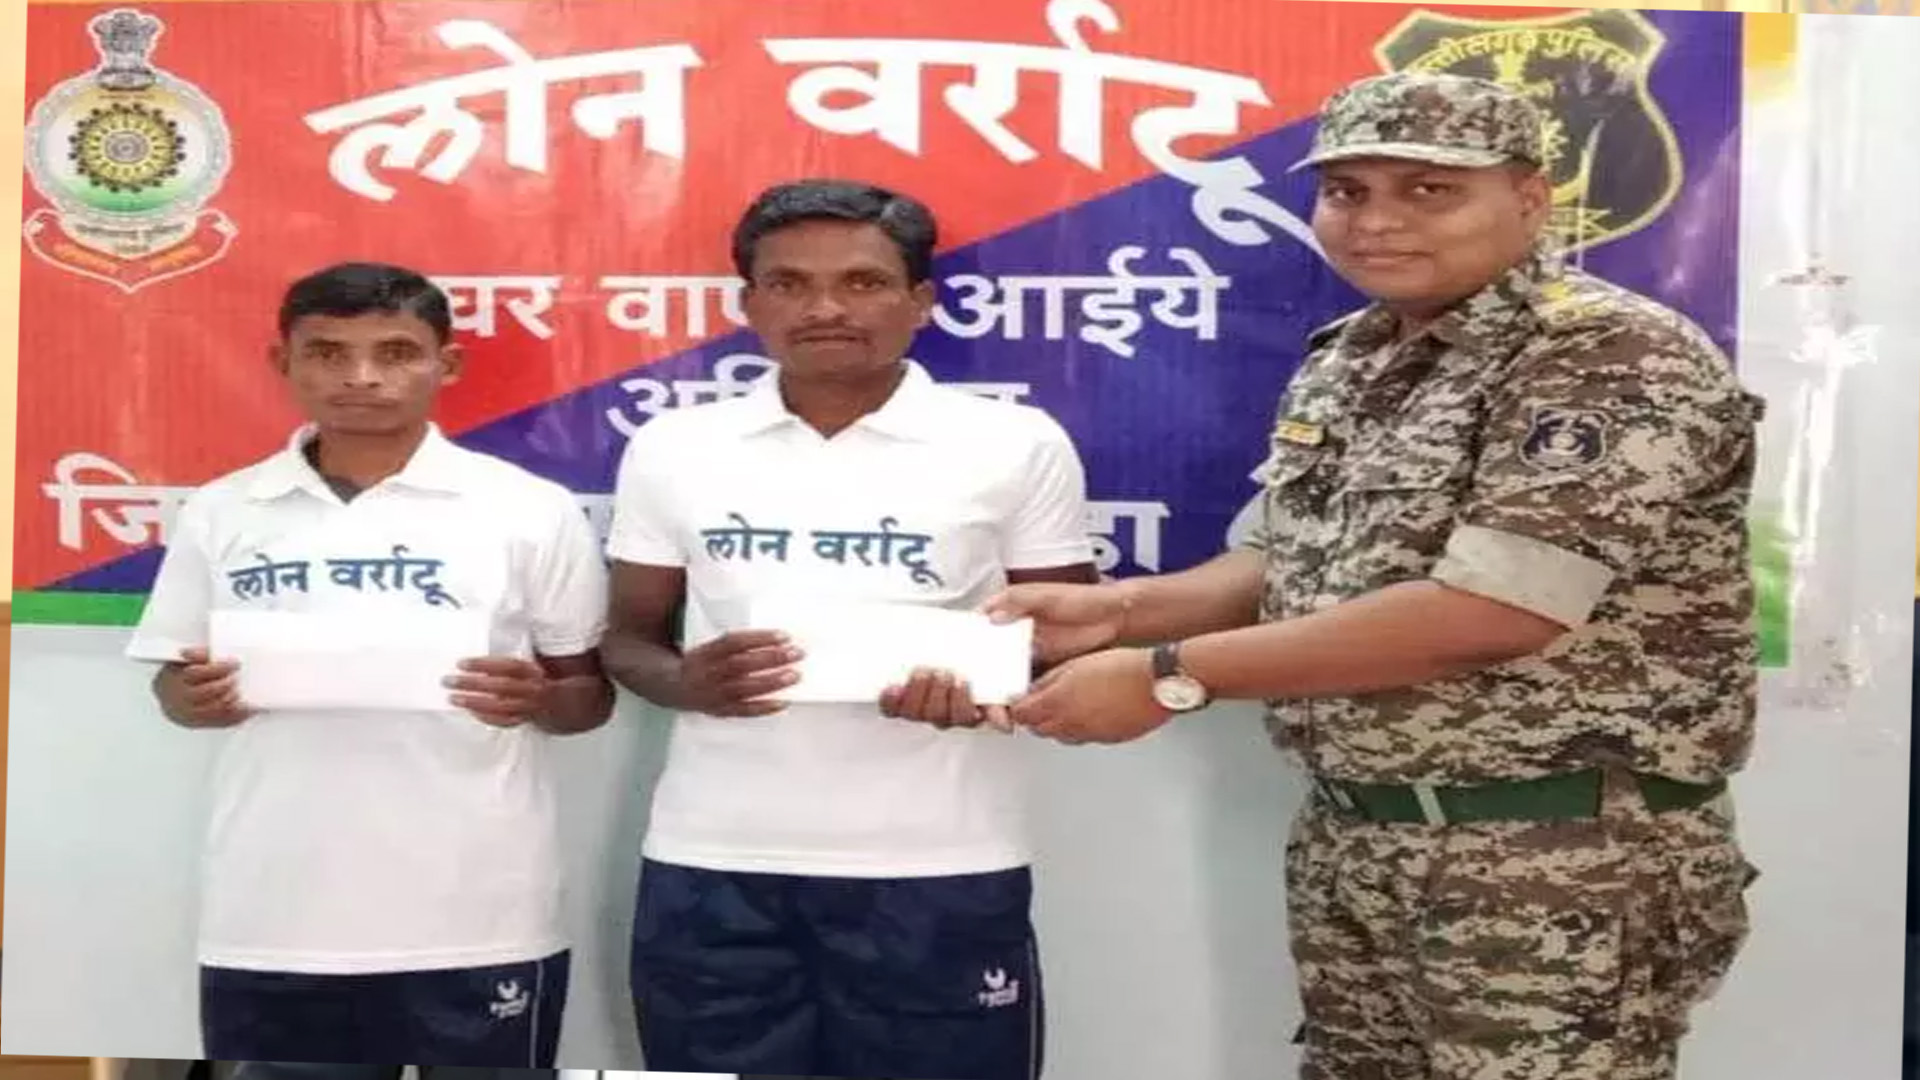 Two Naxalite members surrendered in DRG office